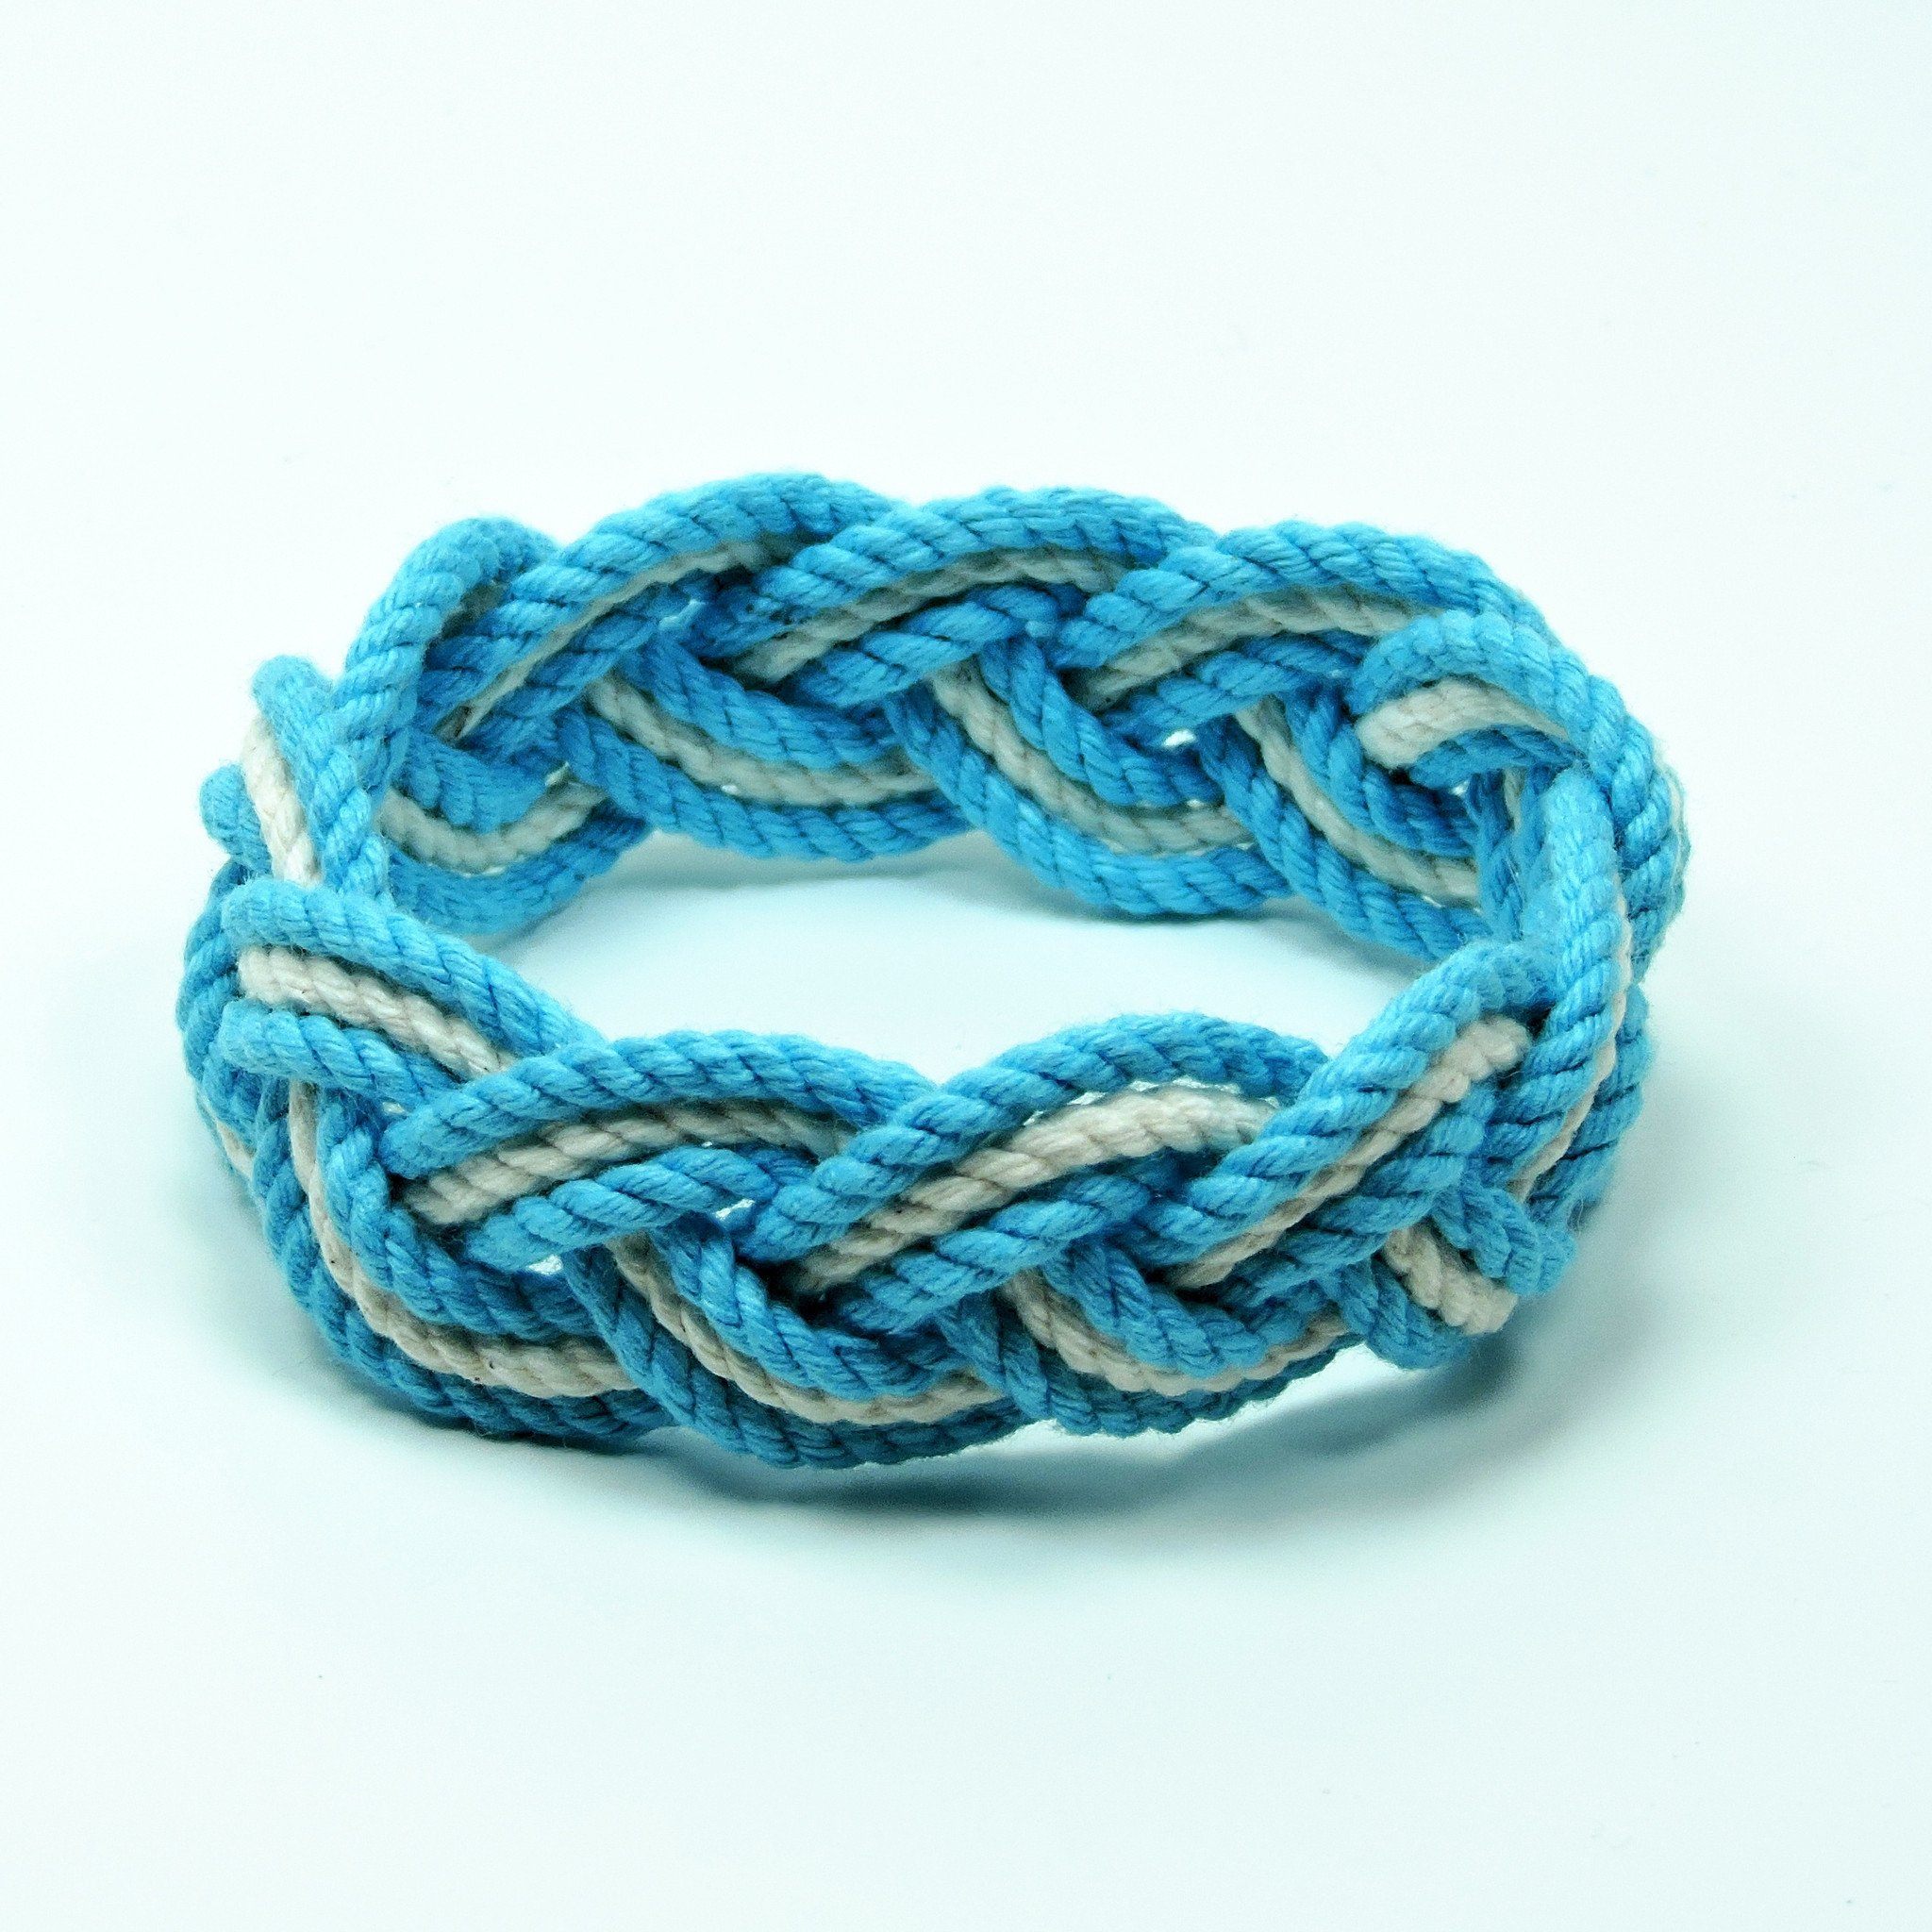 Bulk Pricing Striped Sailor Bracelet, Custom Colors - Choose Your Own Large 7-8 in